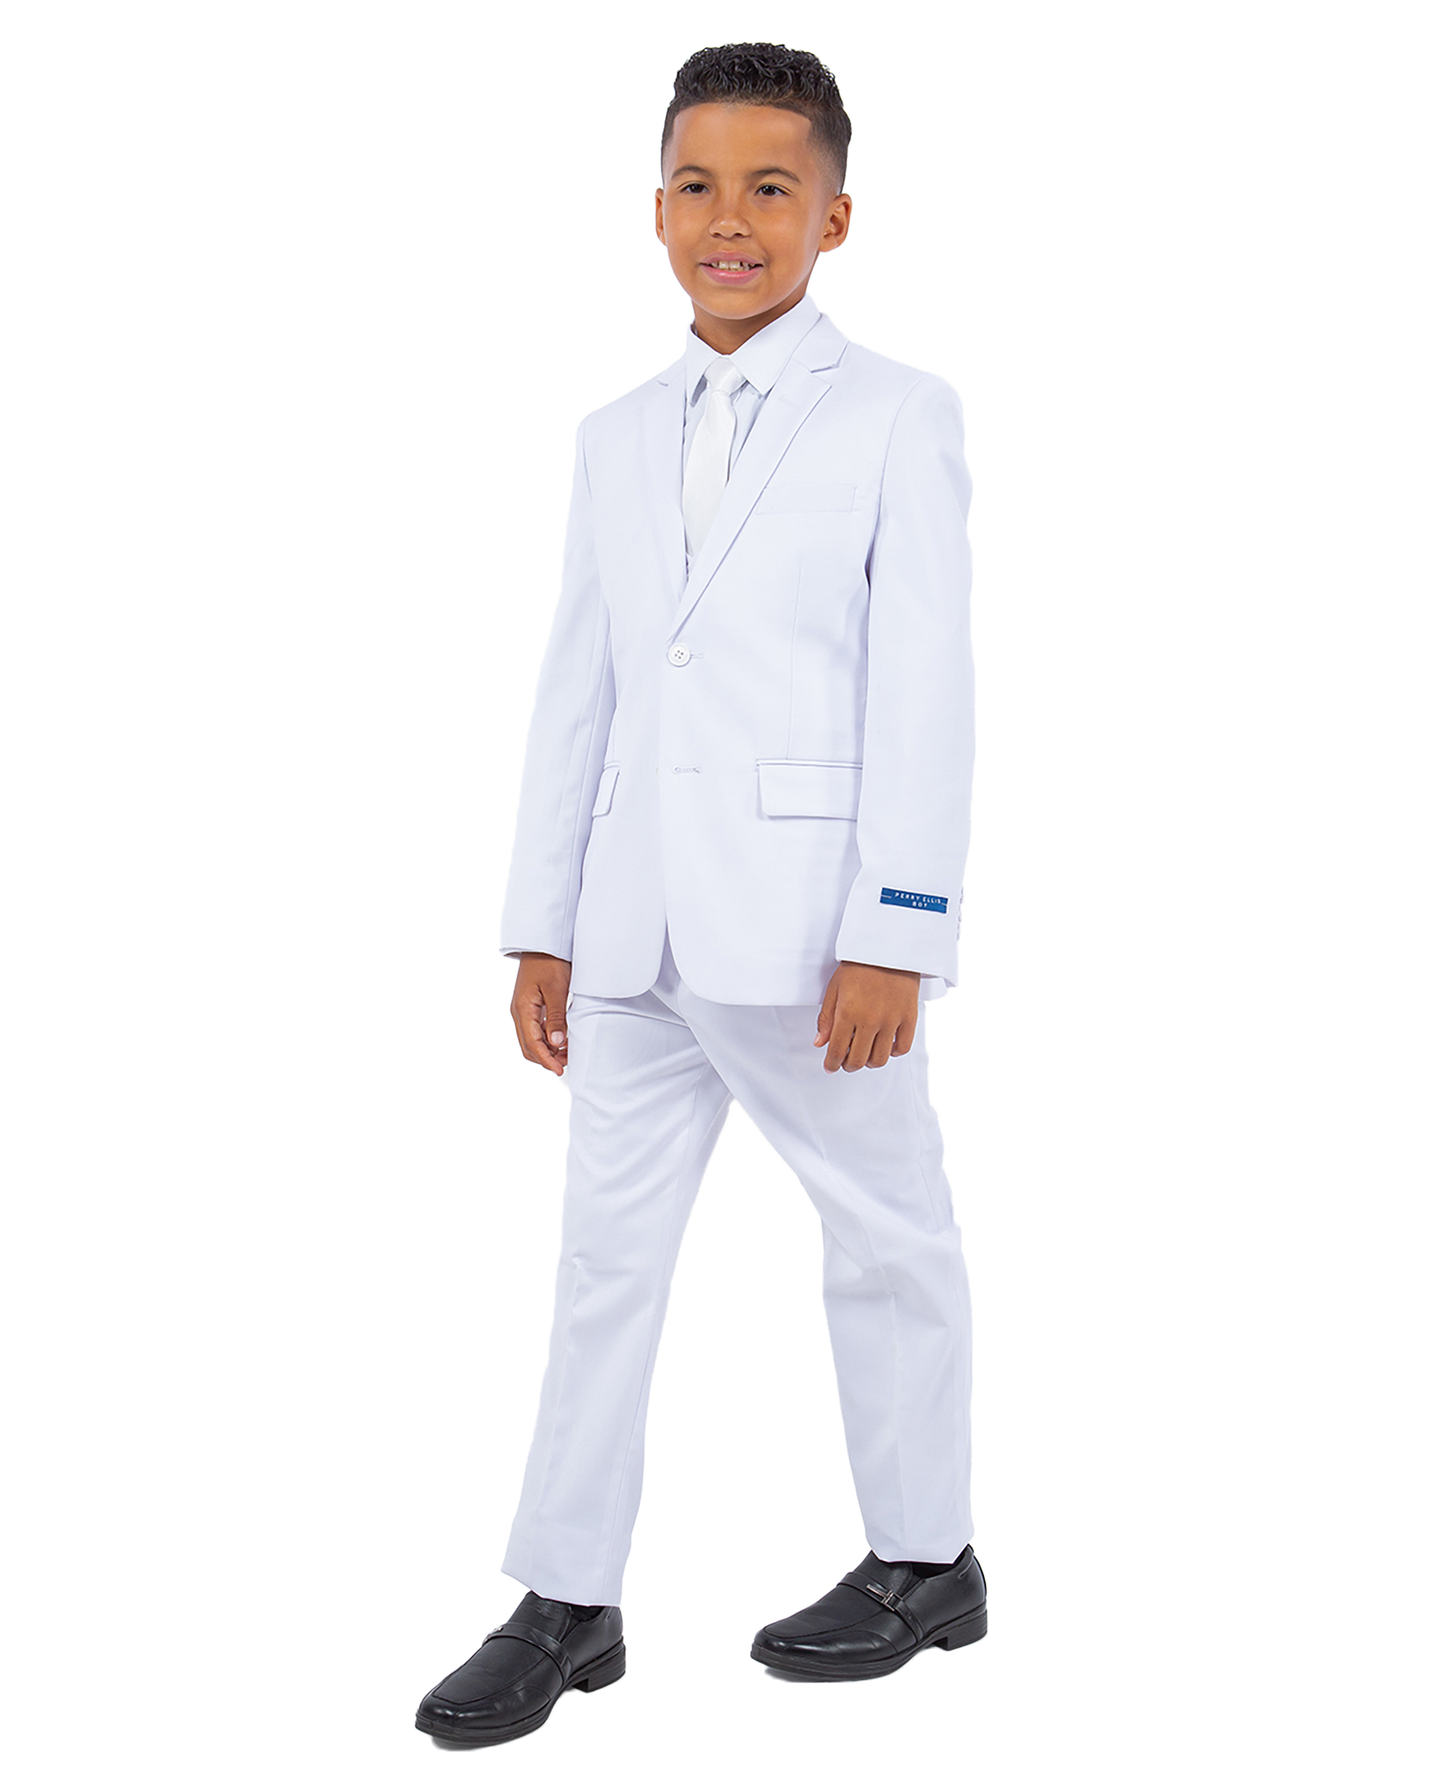 Boys White Perry Ellis Boys Suit PB363-04